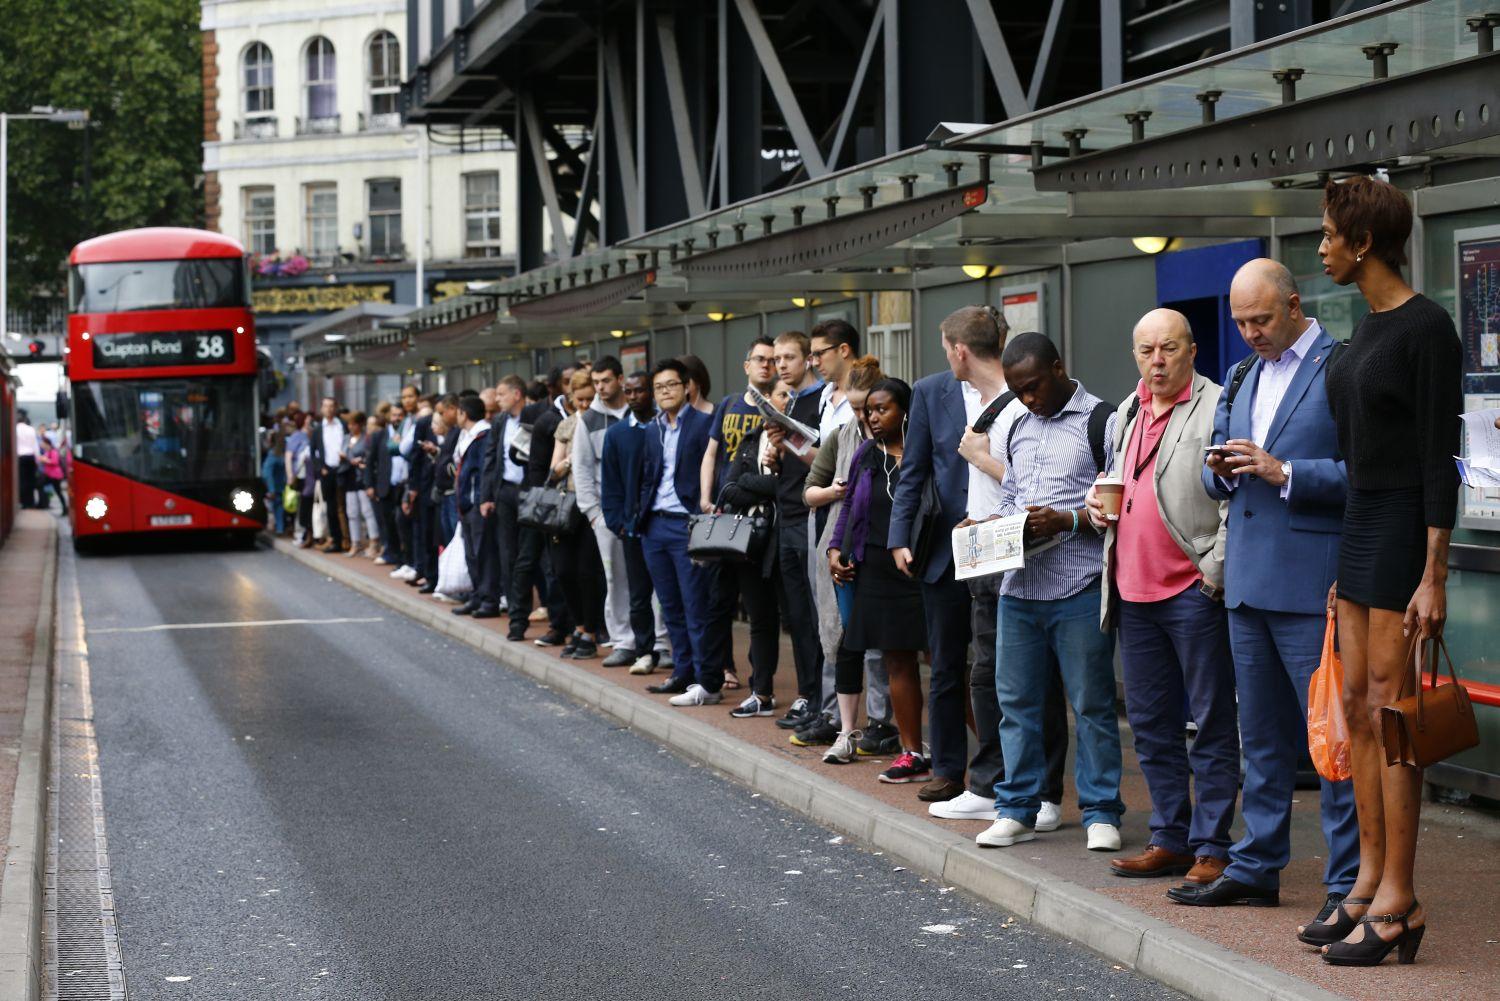 Buszra várakozók a londoni Victoria Stationön